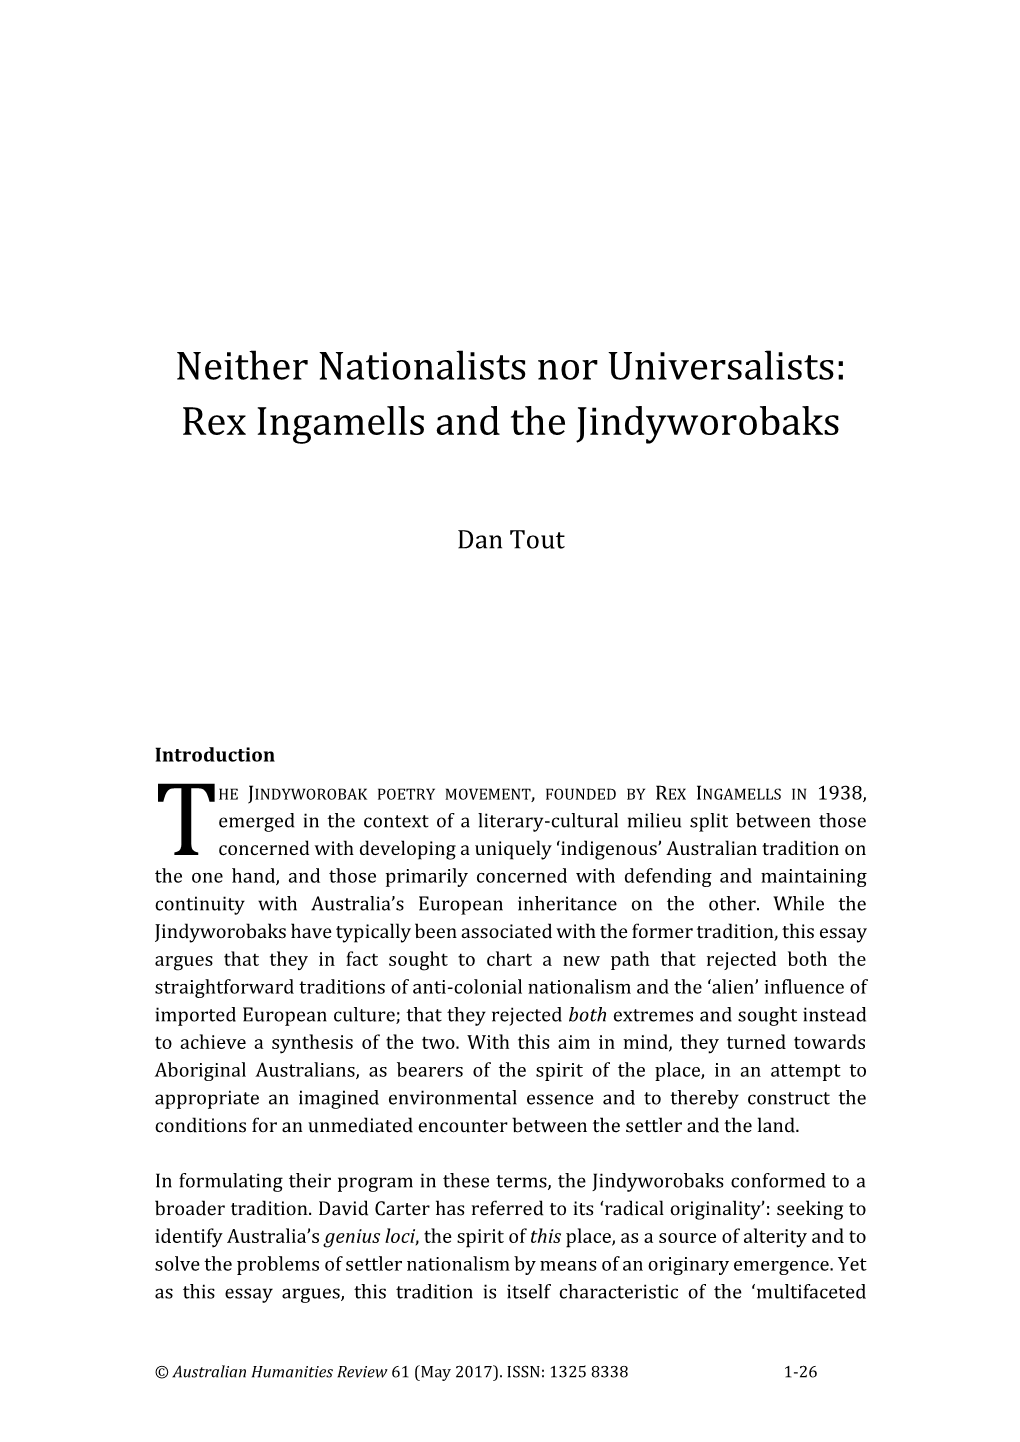 Neither Nationalists Nor Universalists: Rex Ingamells and the Jindyworobaks